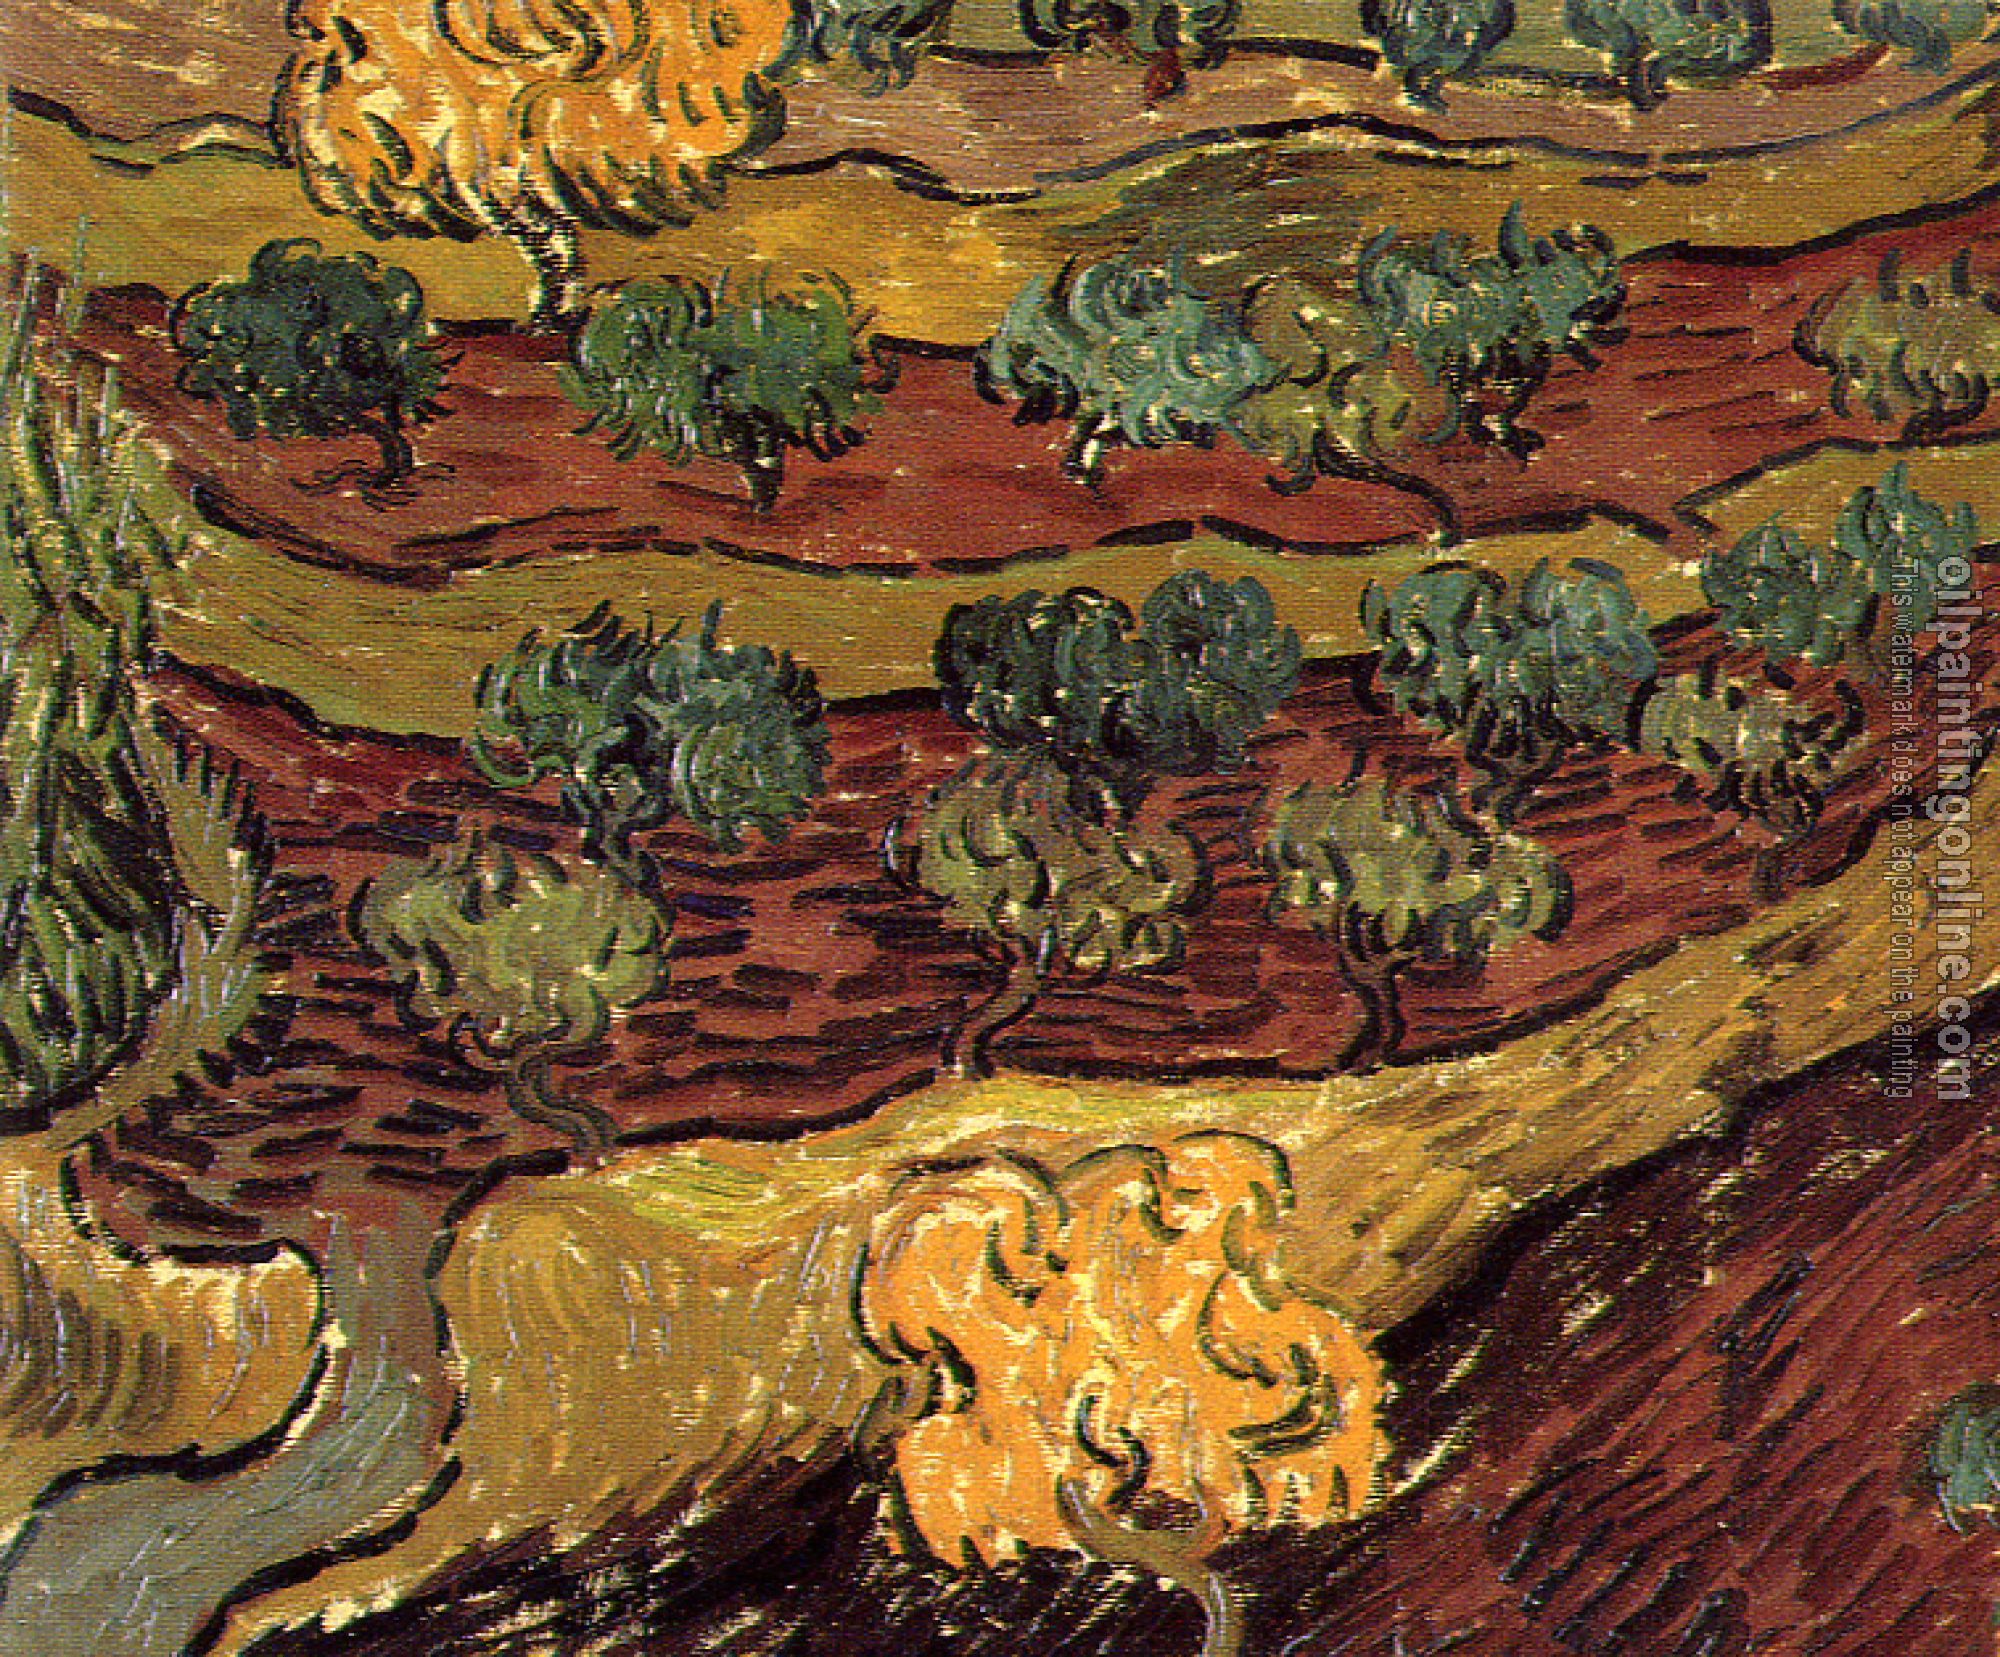 Gogh, Vincent van - Olive Orchard(Birds-EyeView)